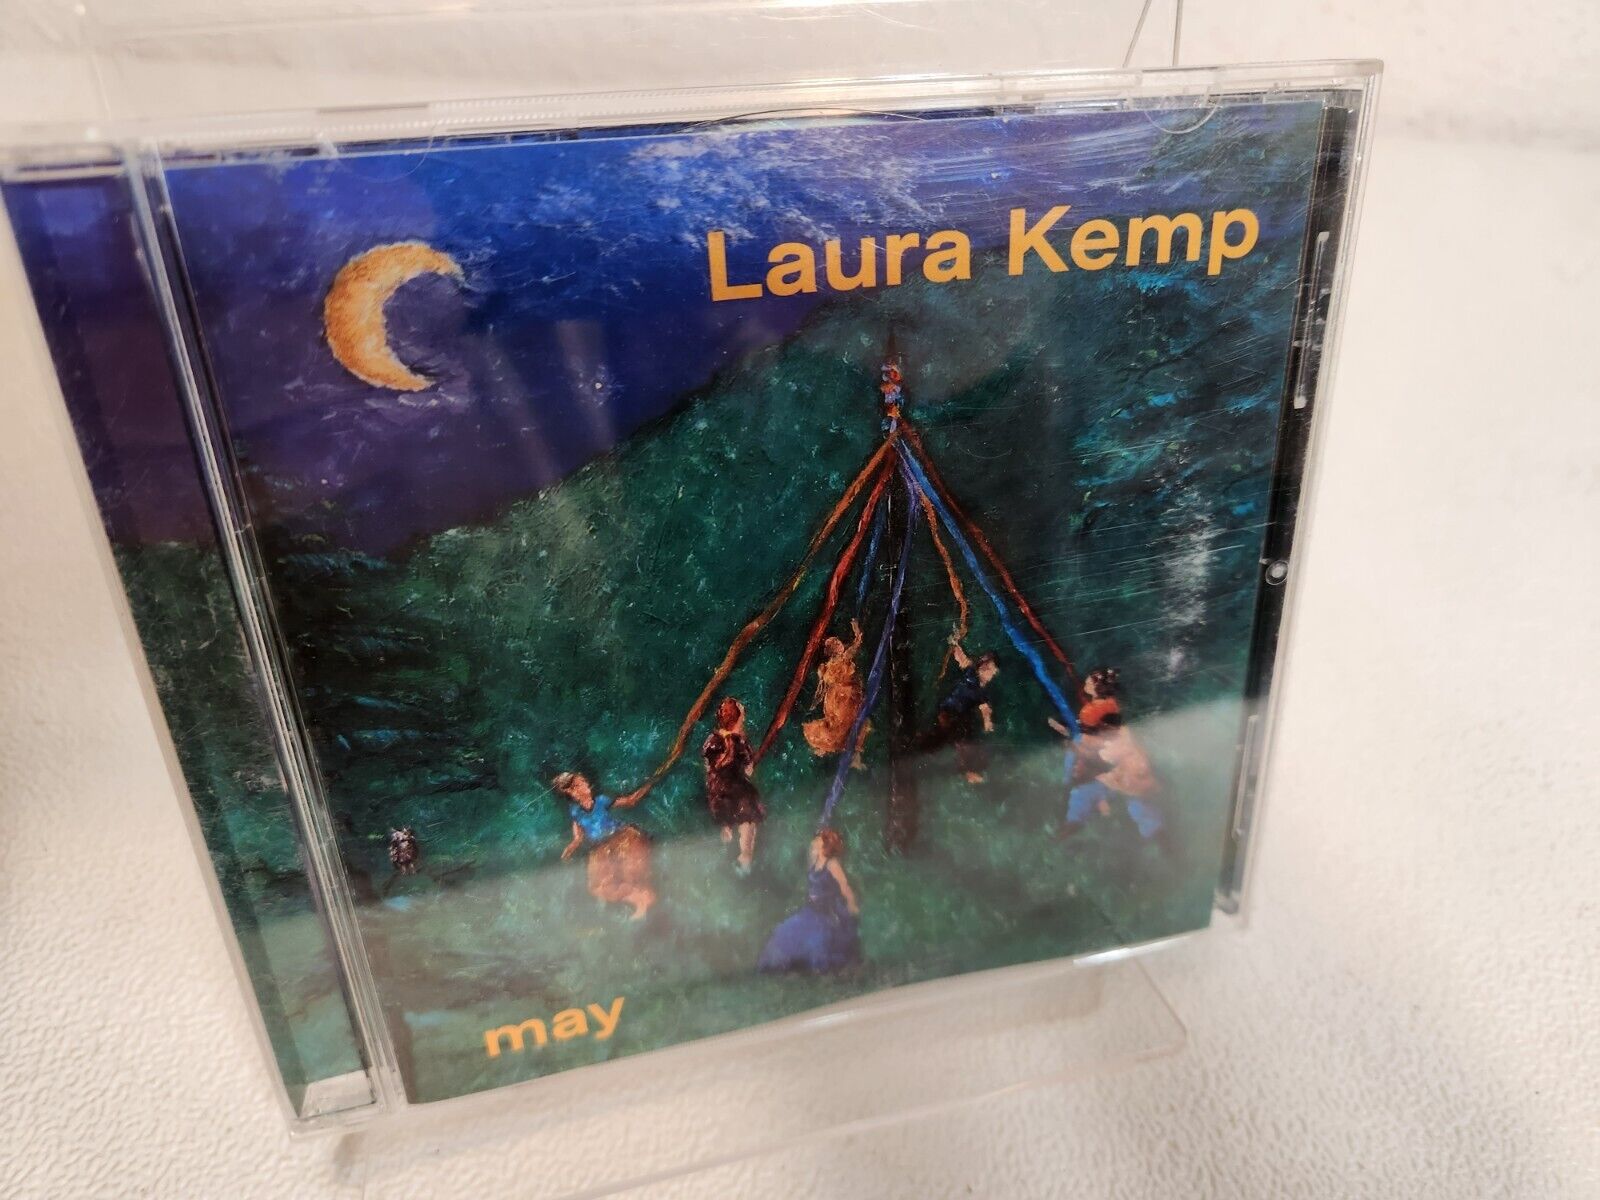 Laura Kemp CD - May - 2004 - Very Good - Folk Guitar World Country Fast FreeShip